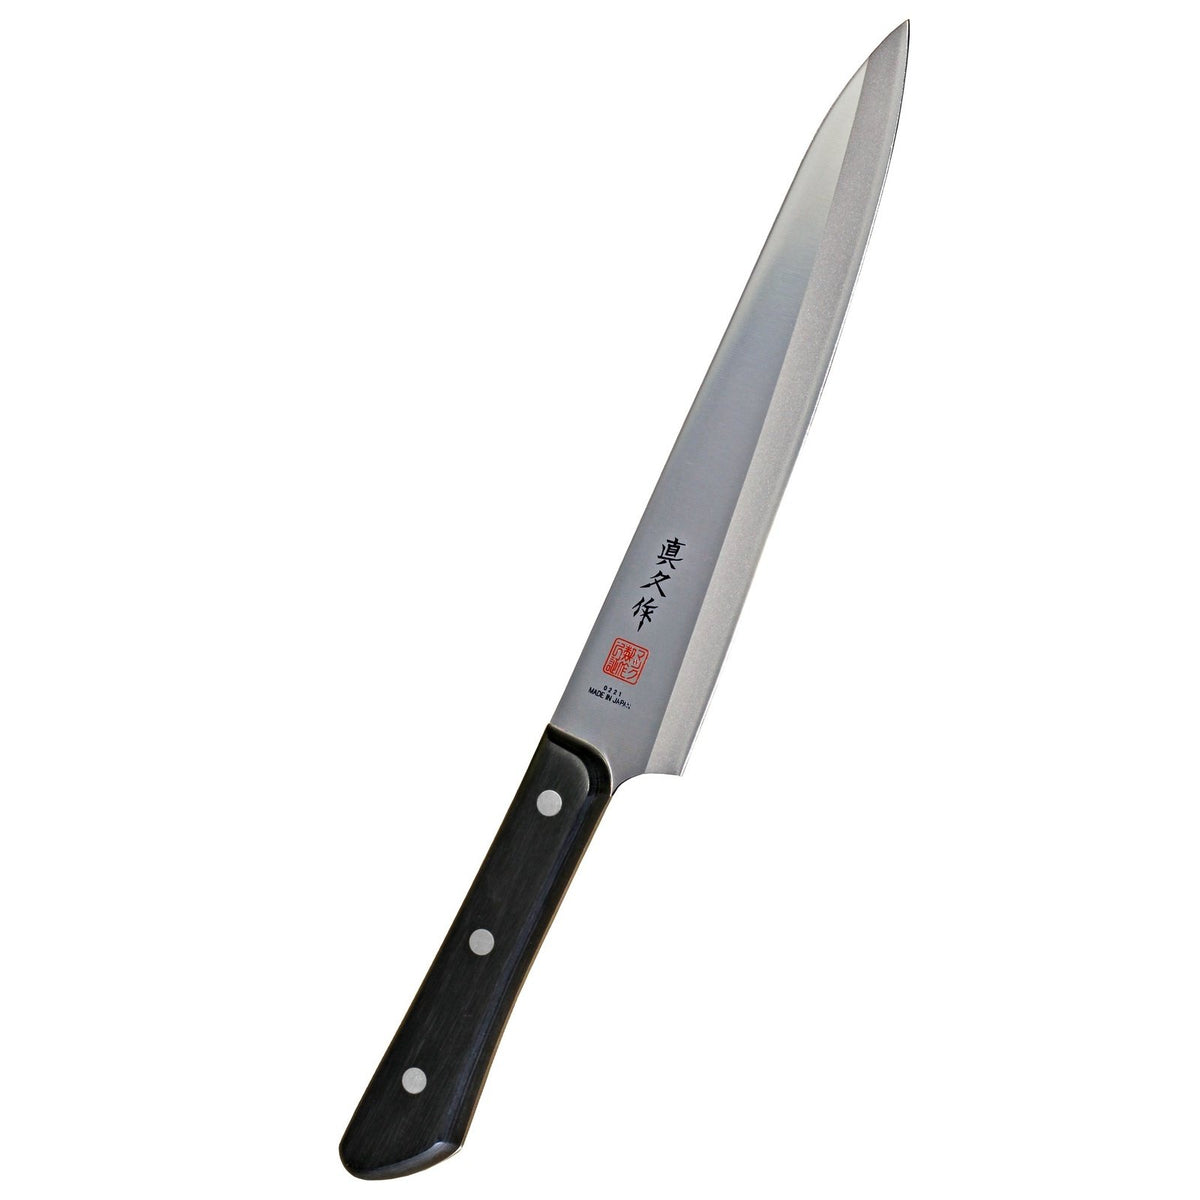 MAC Superior Filleting Knife SF-85, 21 cm